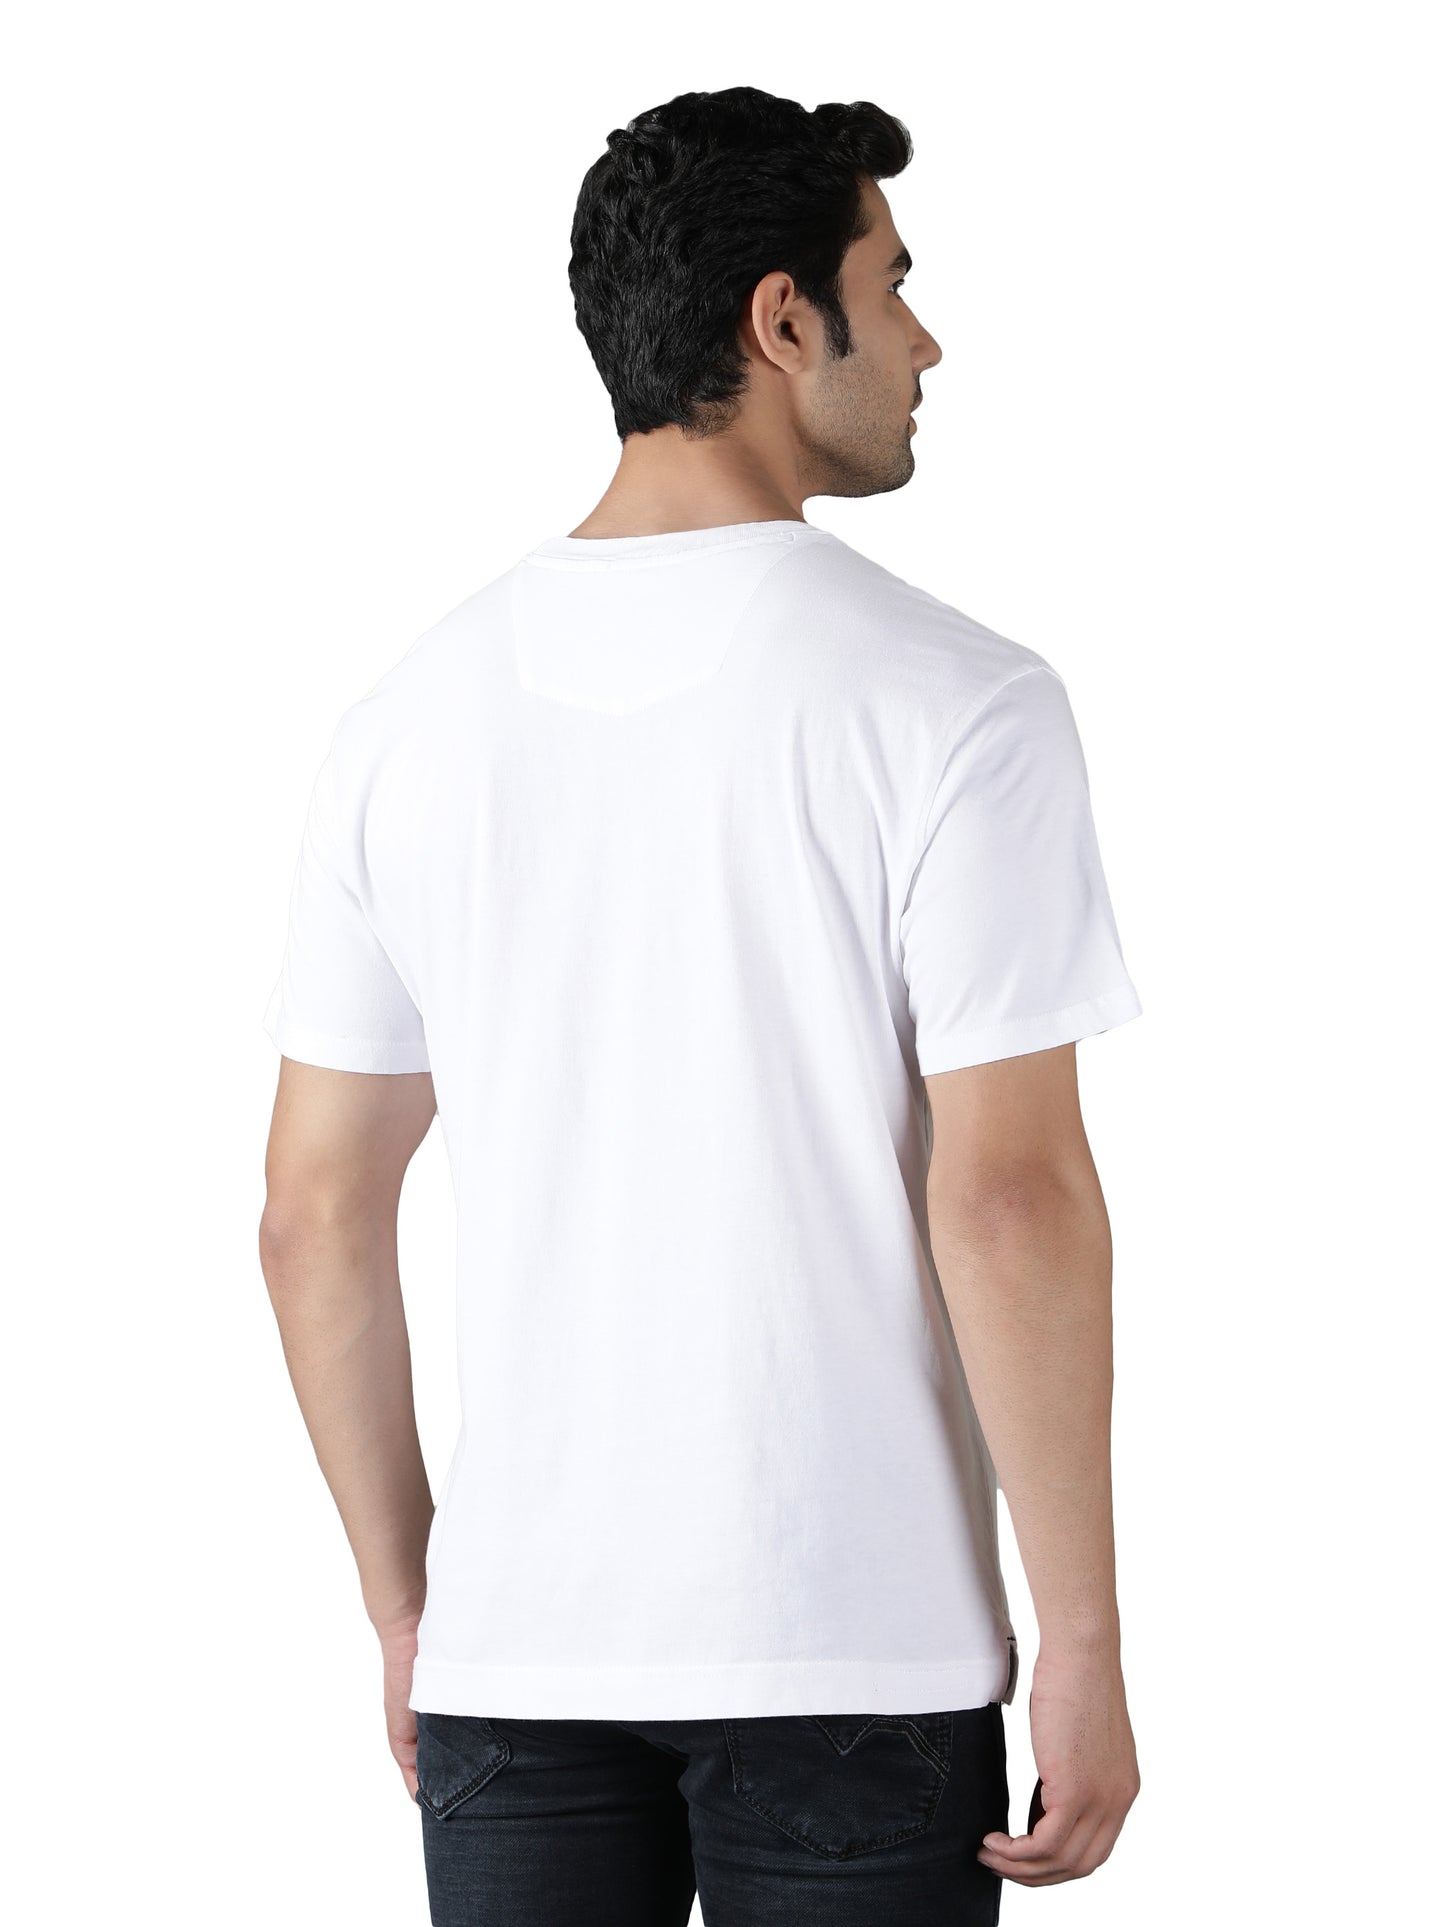 NUEVOSPORTA Men's Cotton Graphic Printed White T-Shirt